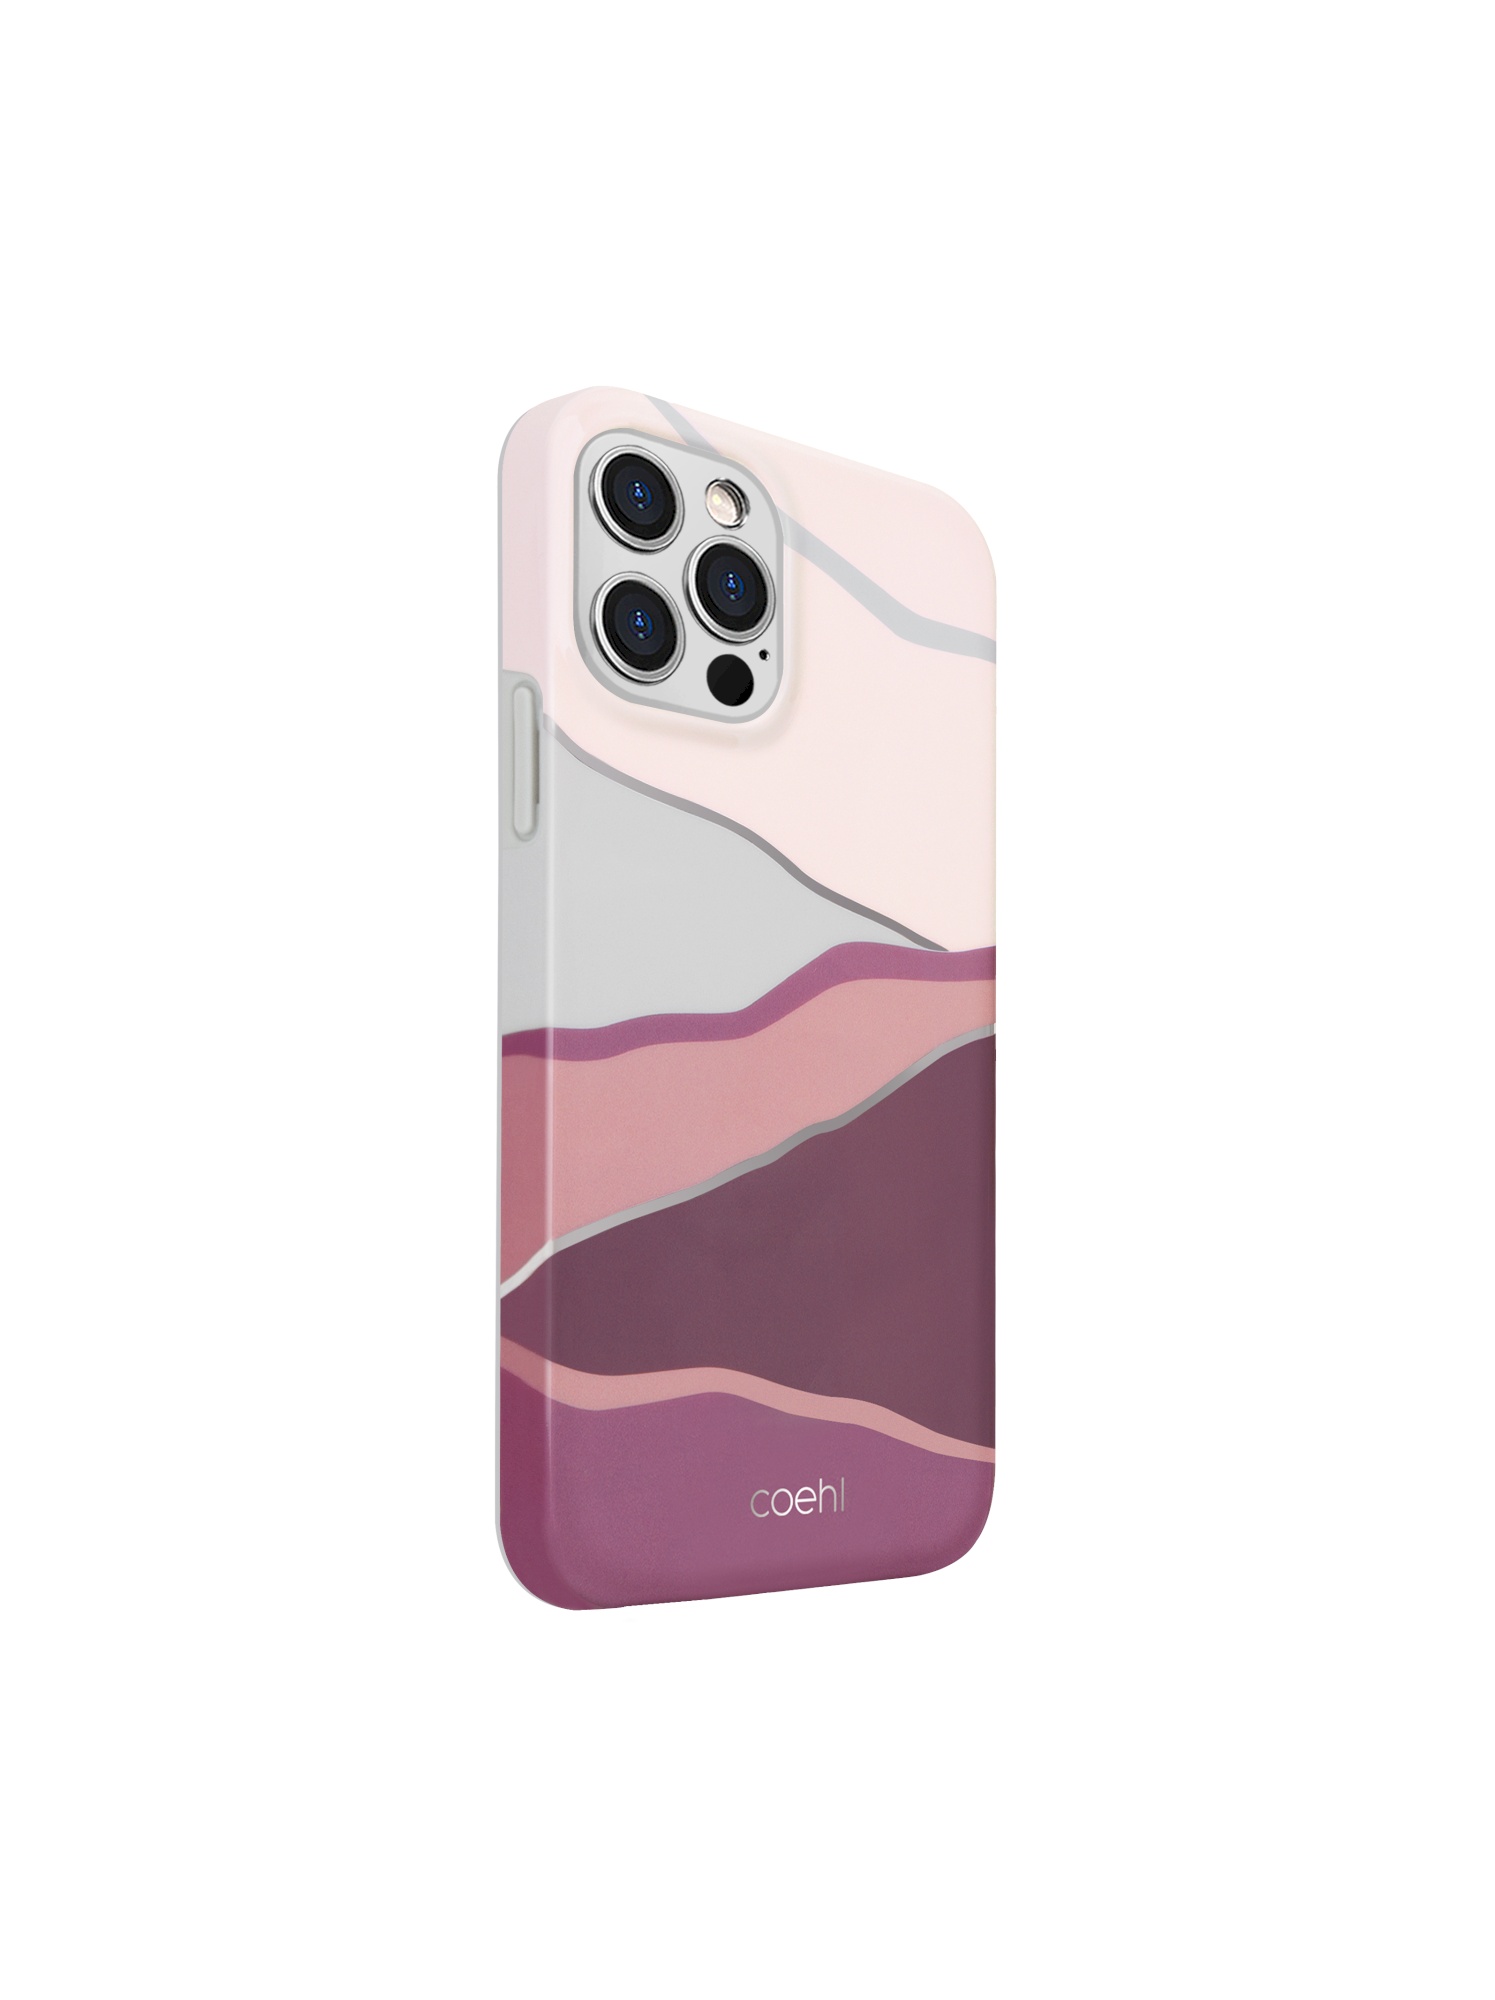 iPhone 12 Pro Max, case coehl ciel sunset pink, pink